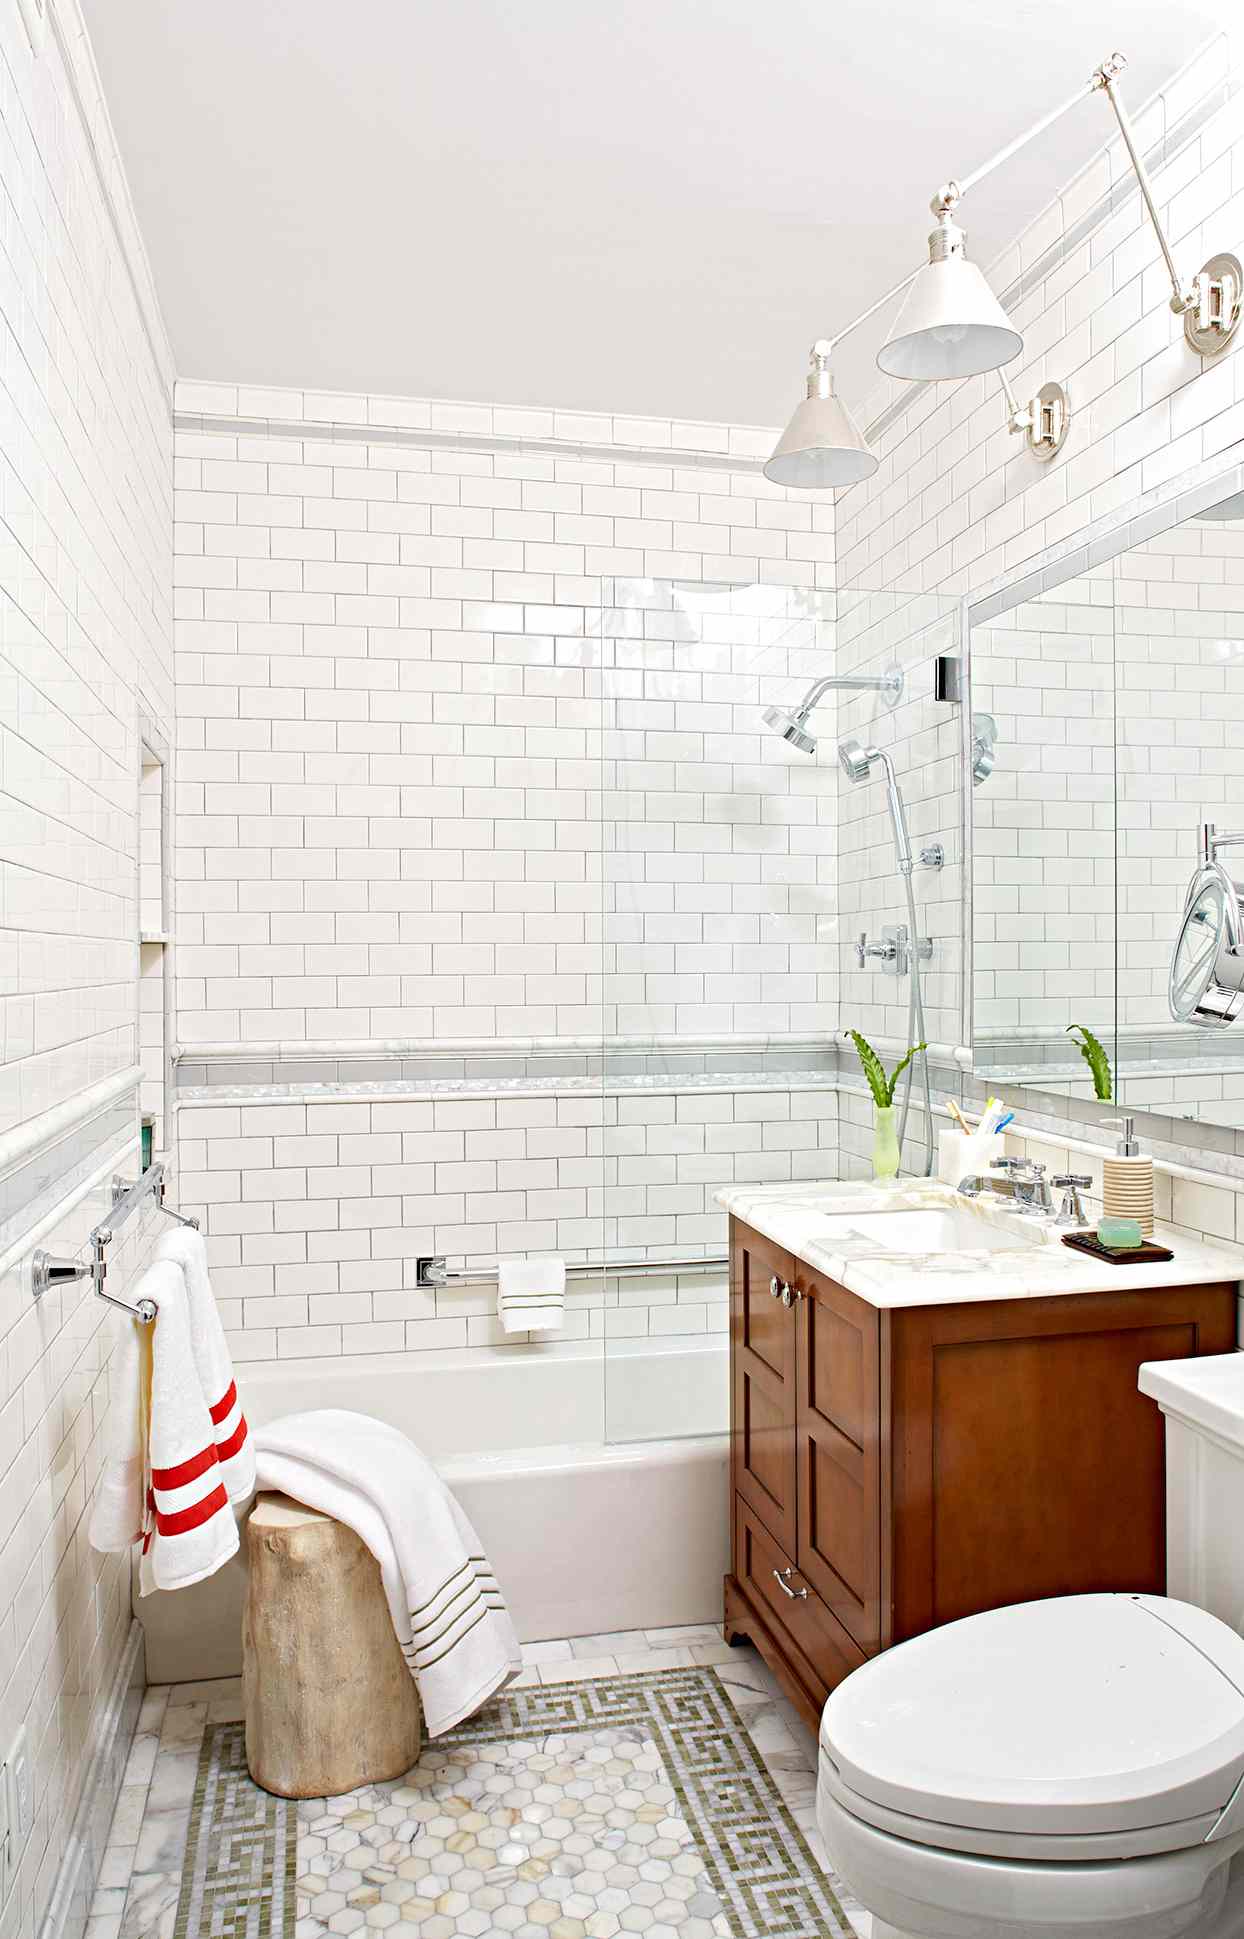 Tile A Shower Enclosure Or Tub Surround, Tub Surround Over Old Tile